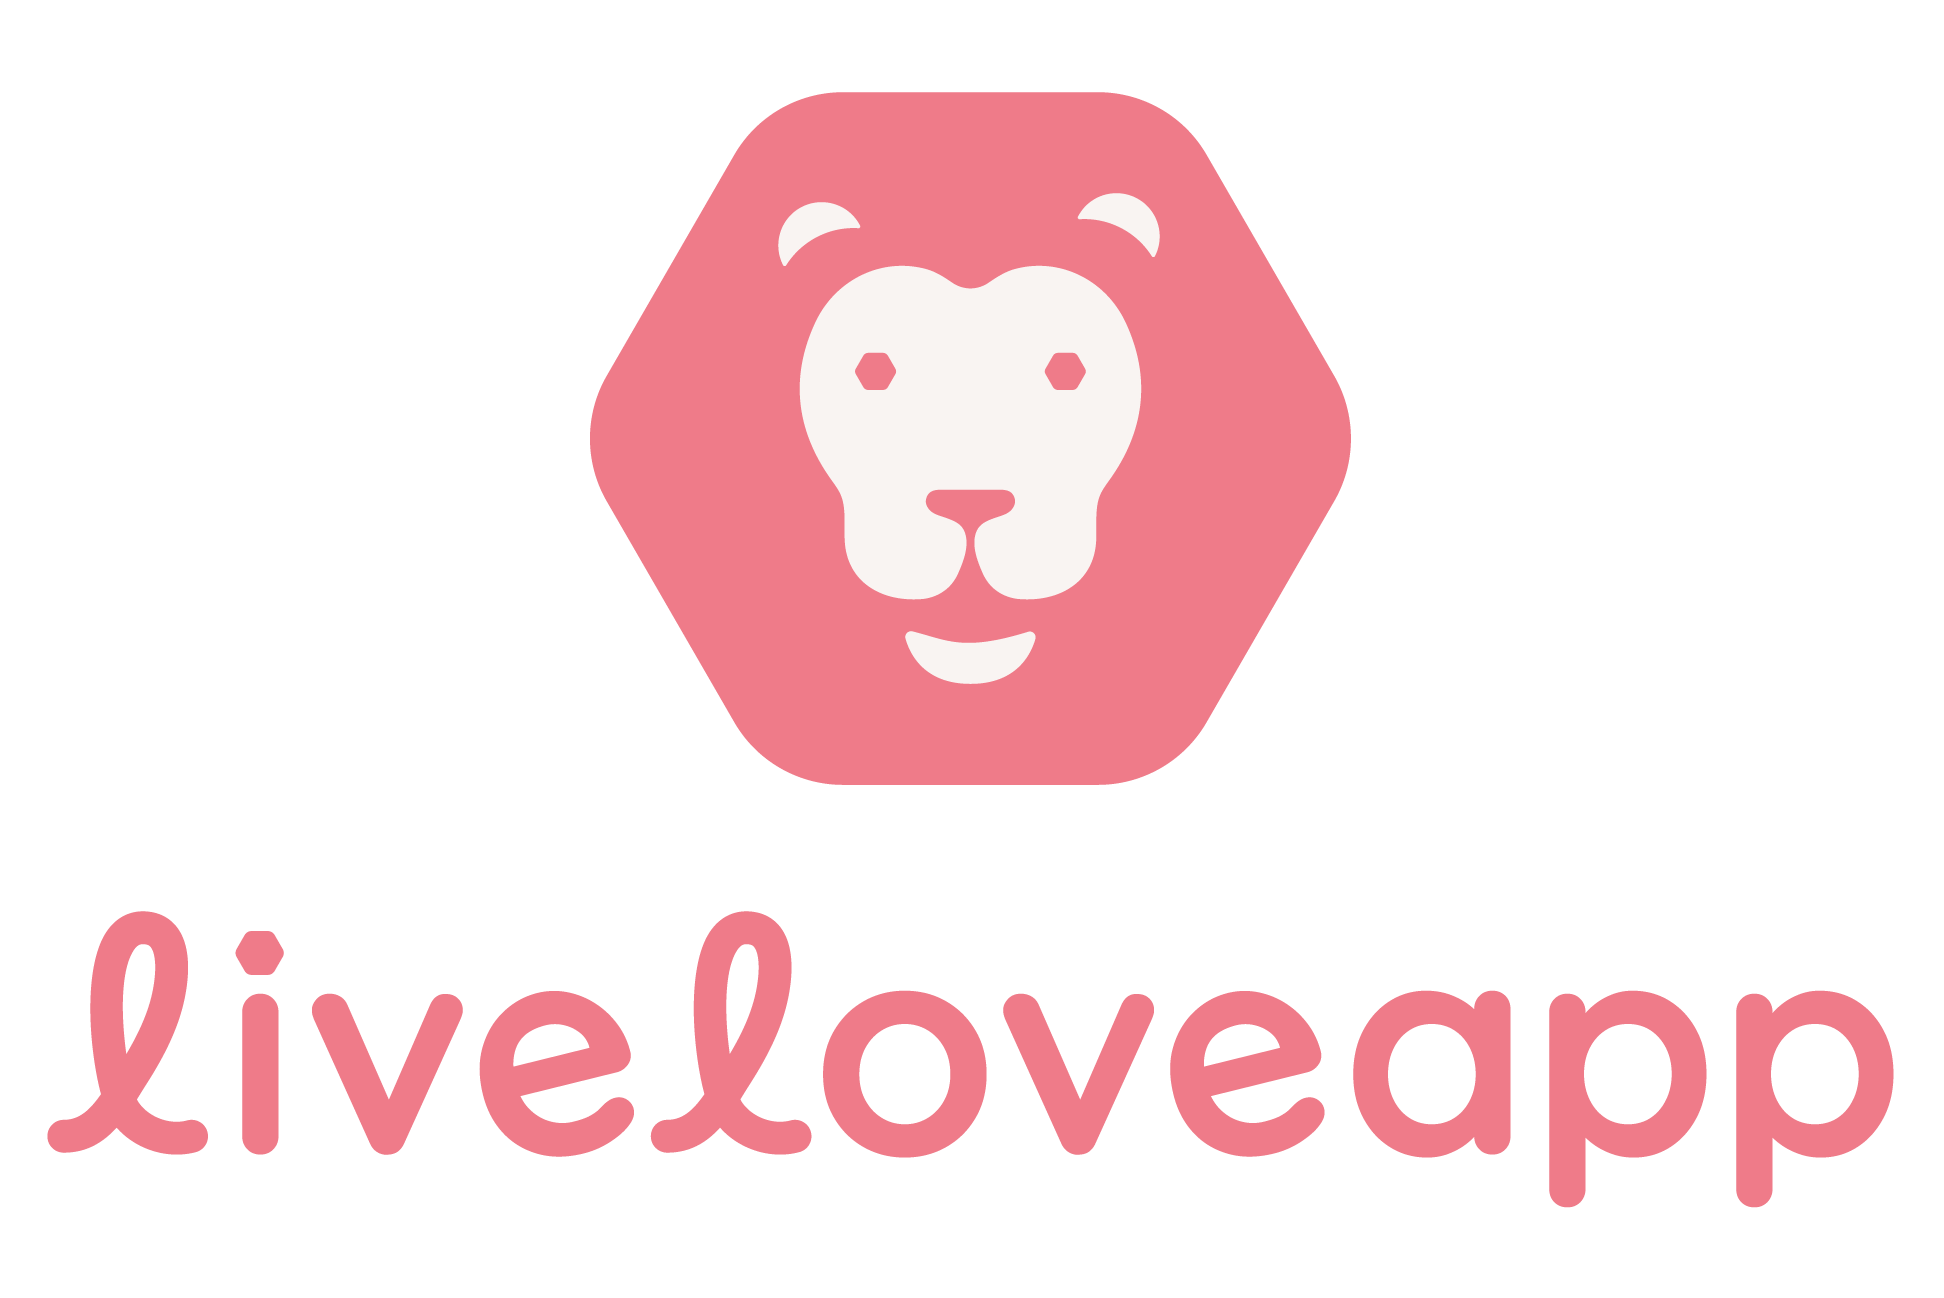 LiveLoveApp logo